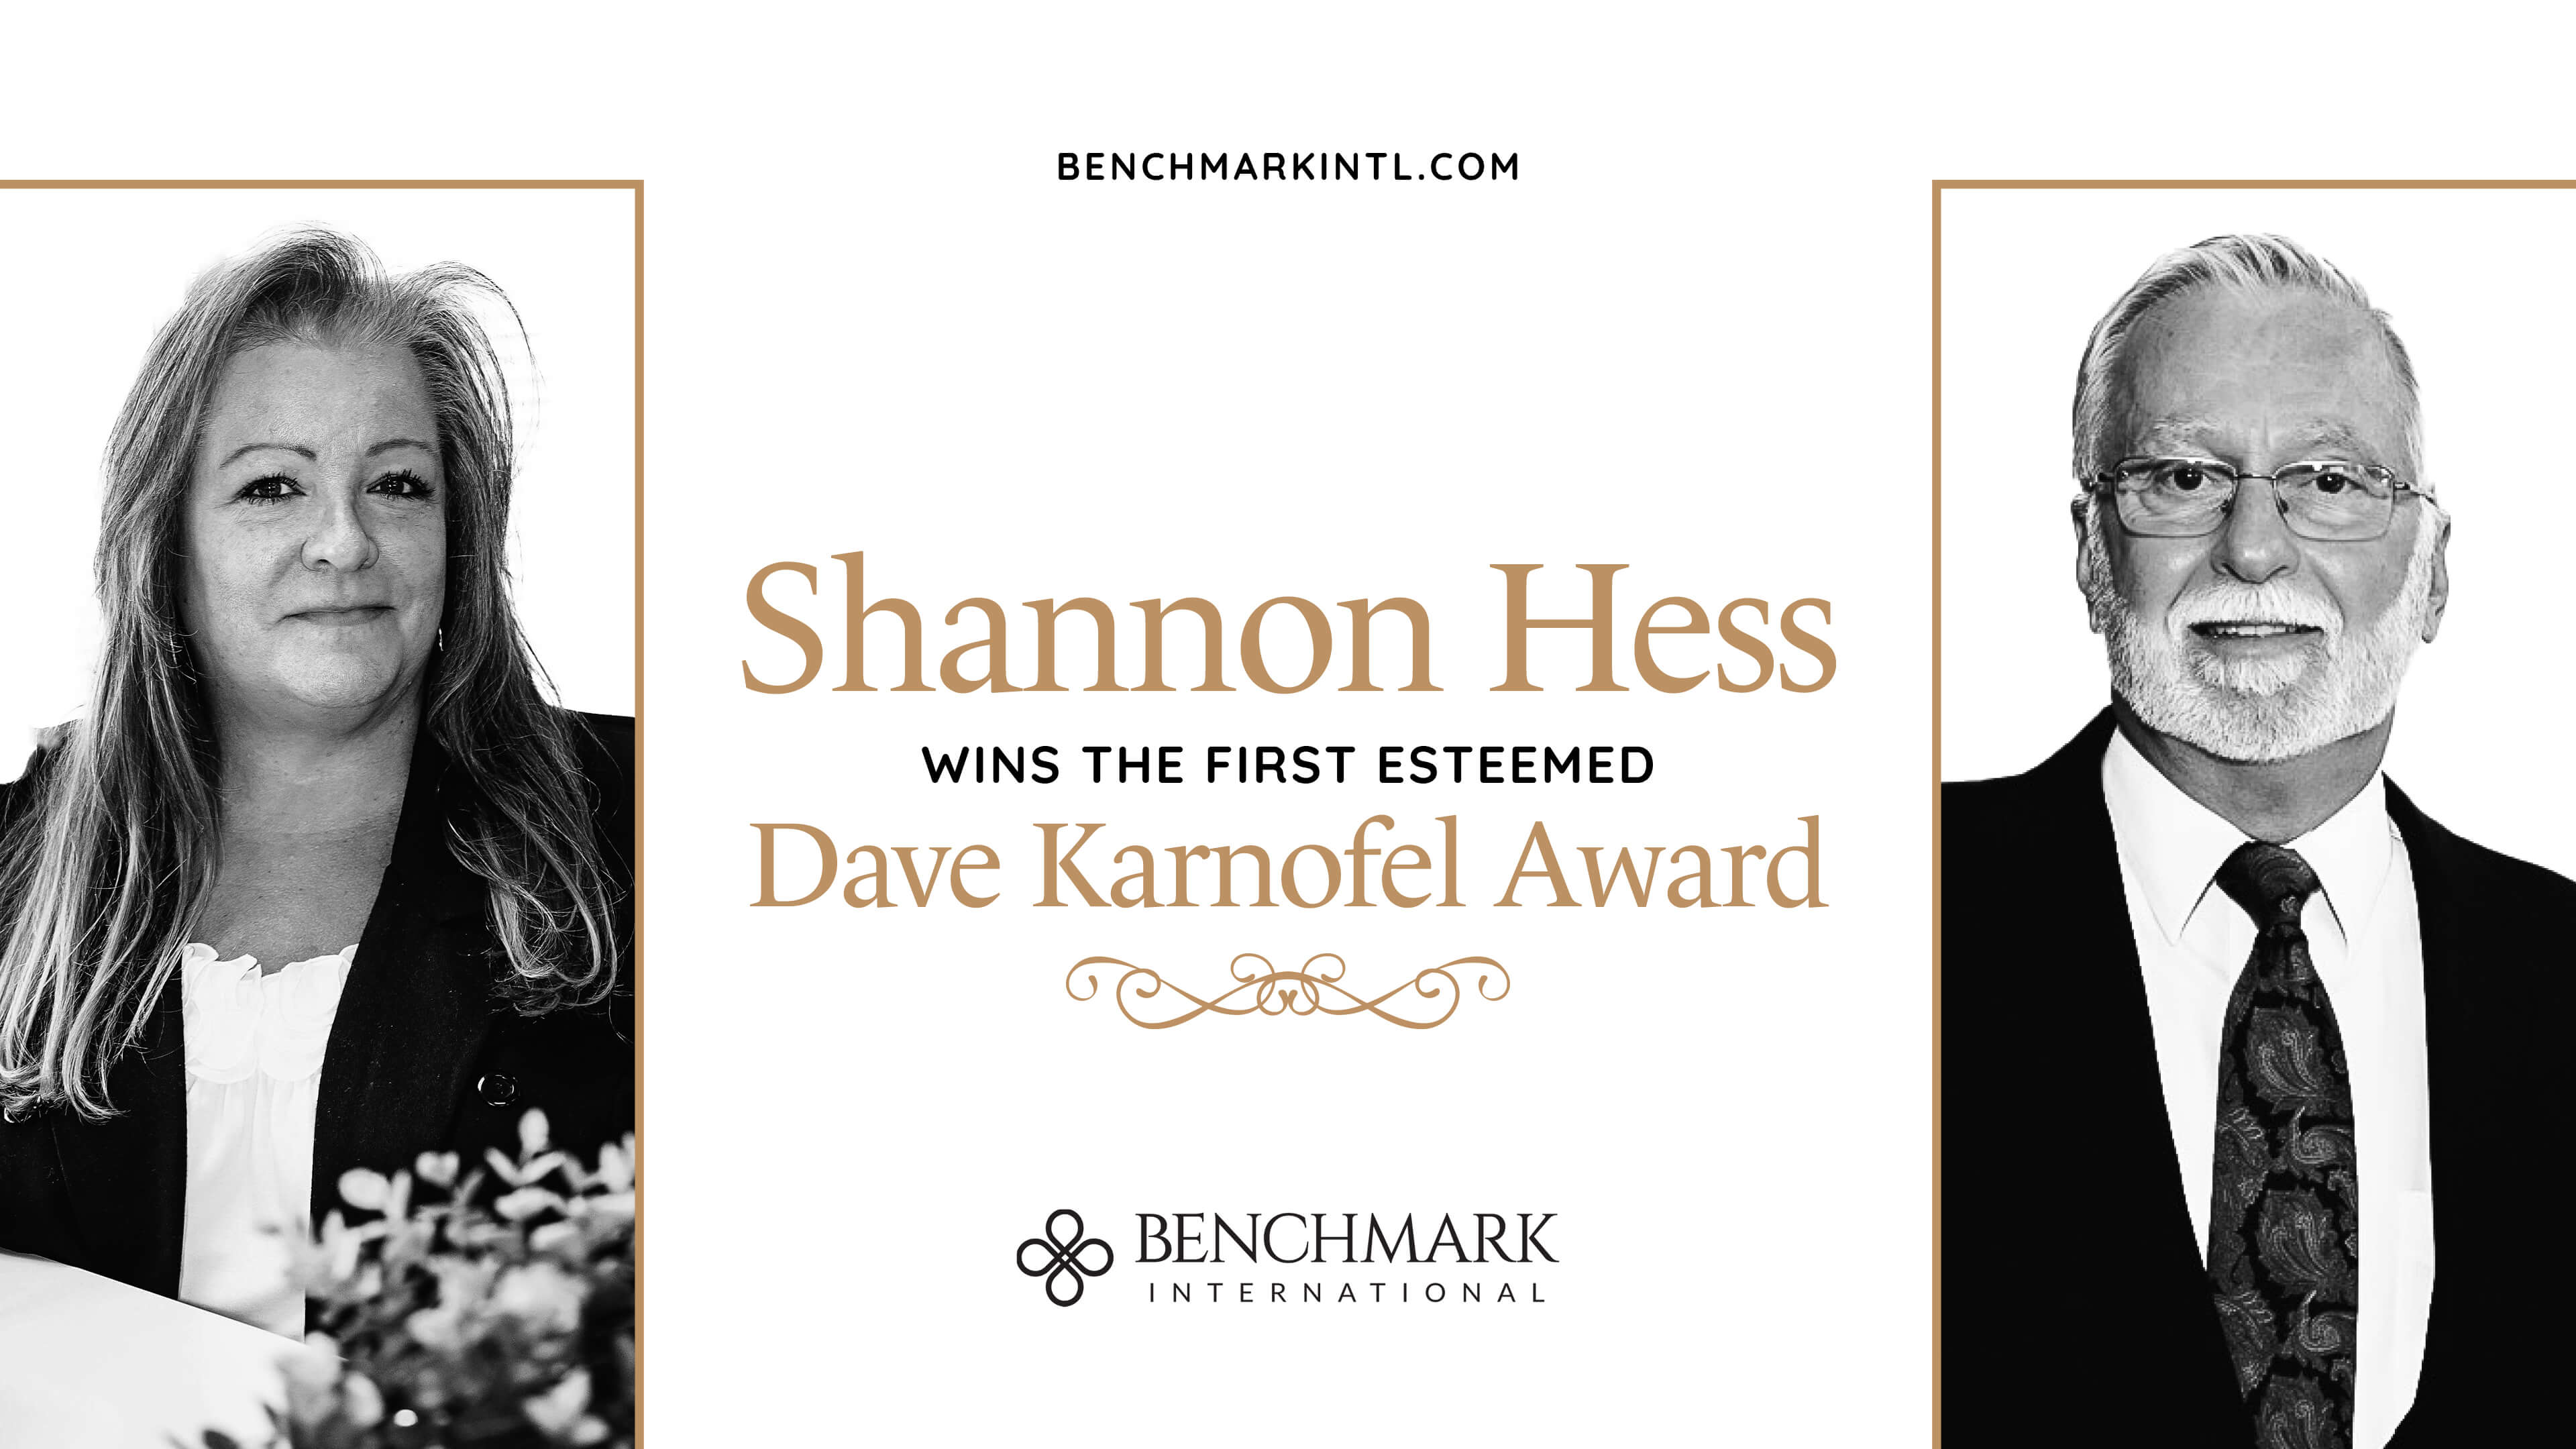 Shannon Hess Wins The First Esteemed Dave Karnofel Award